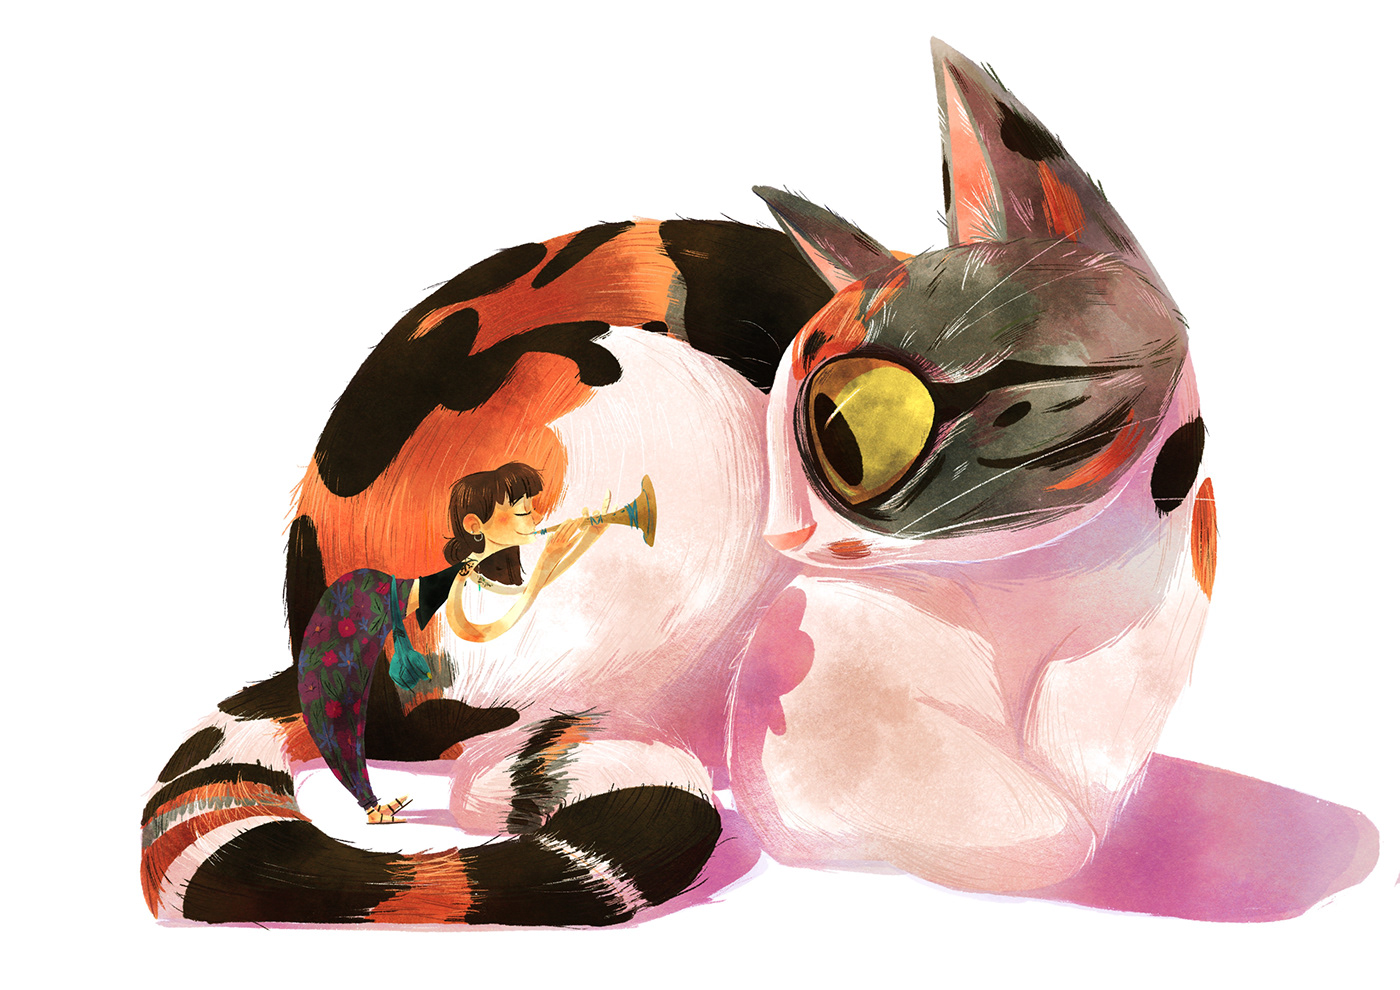 Gato Cat chica girl ILLUSTRATION  Character design digital giant small